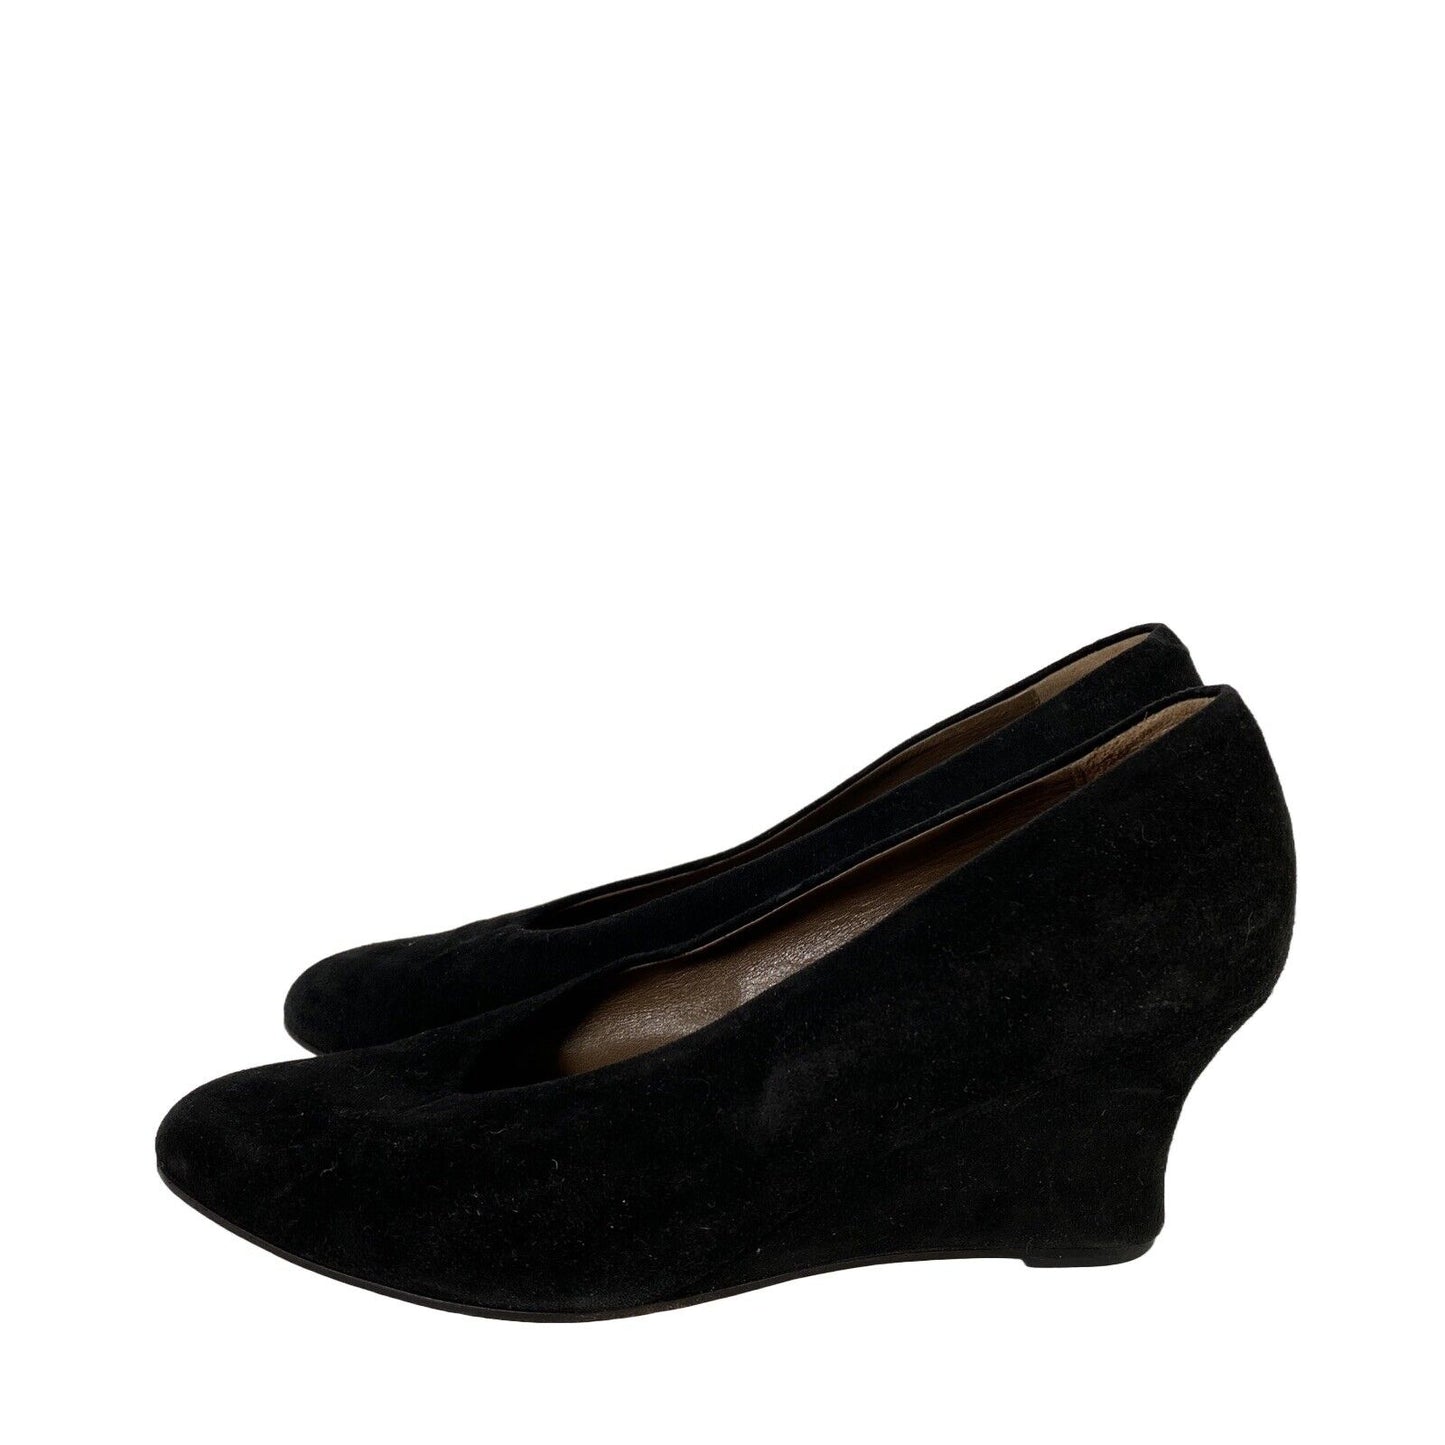 Panara Women's Black Suede Wedge Dress Shoes 37.5 (US 7.5)